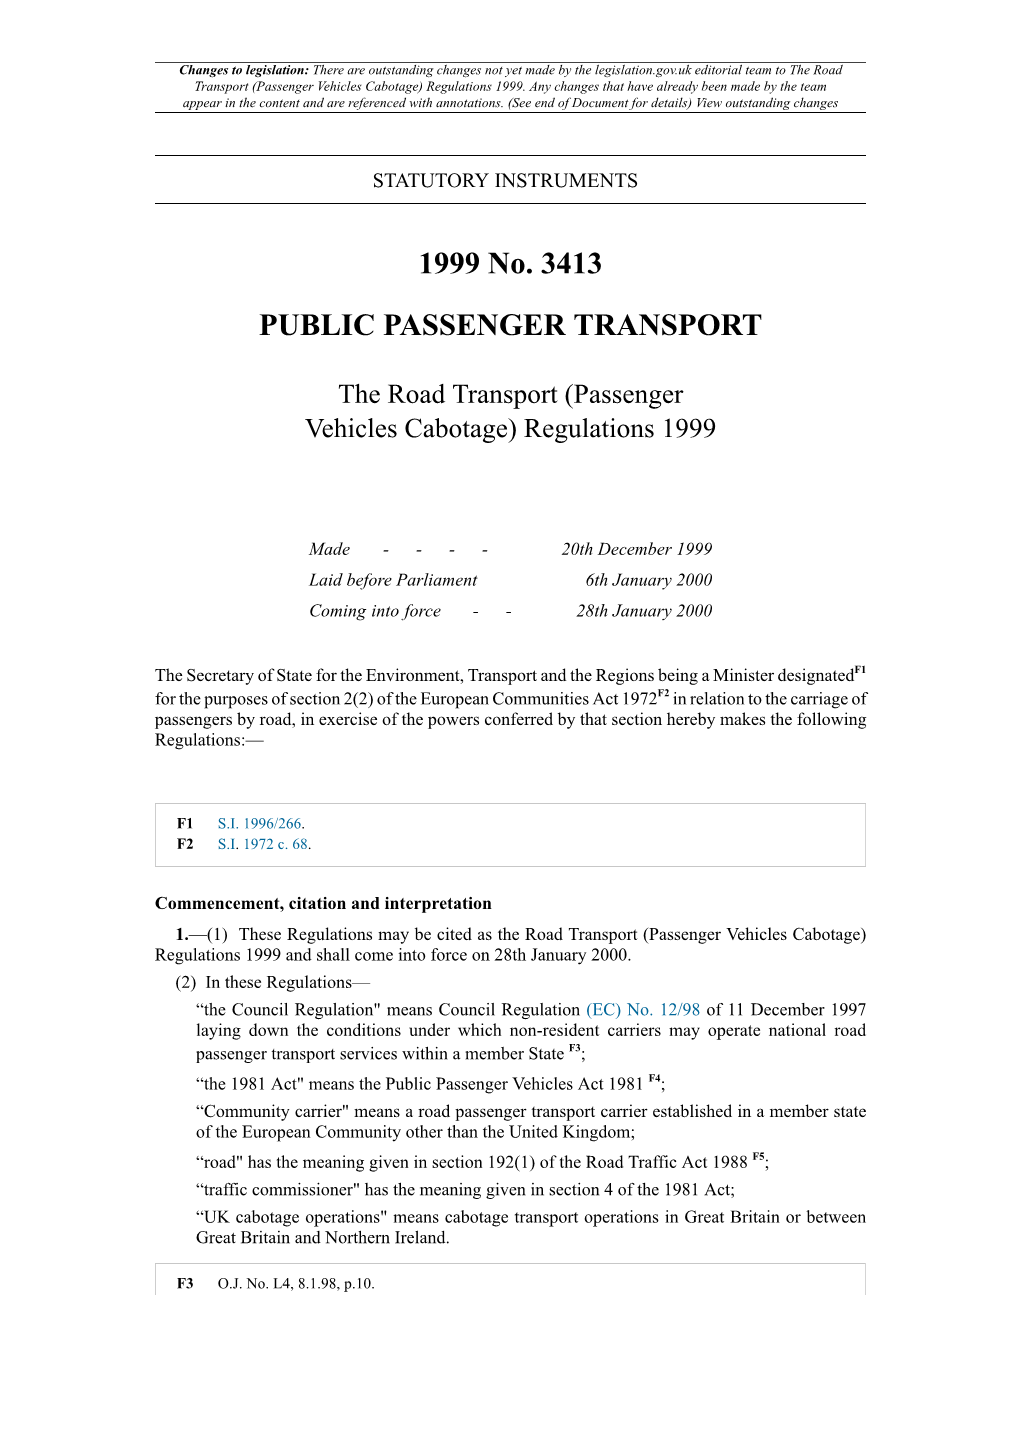 The Road Transport (Passenger Vehicles Cabotage) Regulations 1999